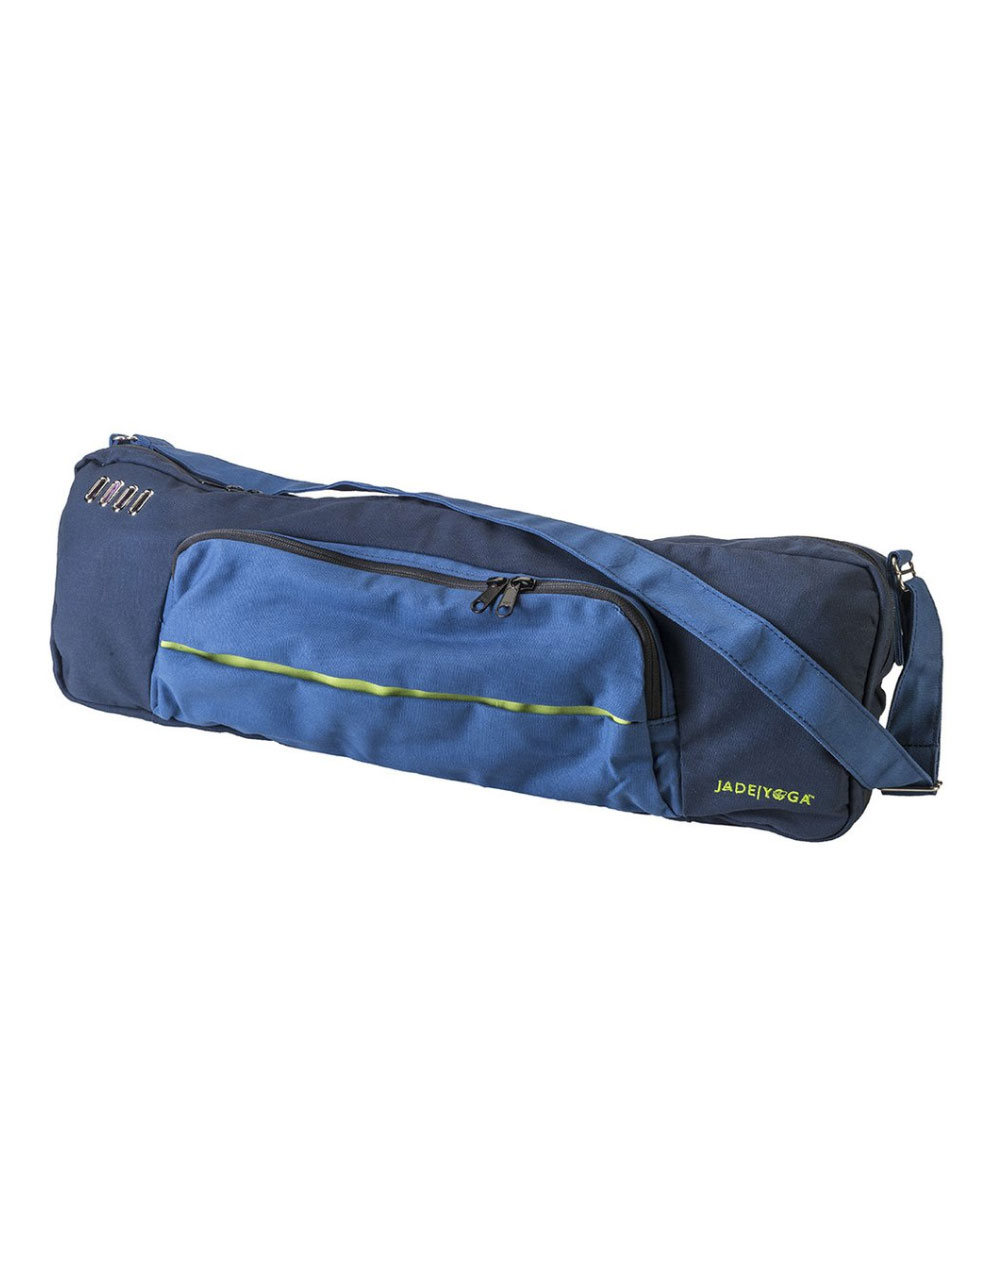 ANGGREK Luggage Backpack Carrier,Multi‑function Yoga Mat Bag Gym